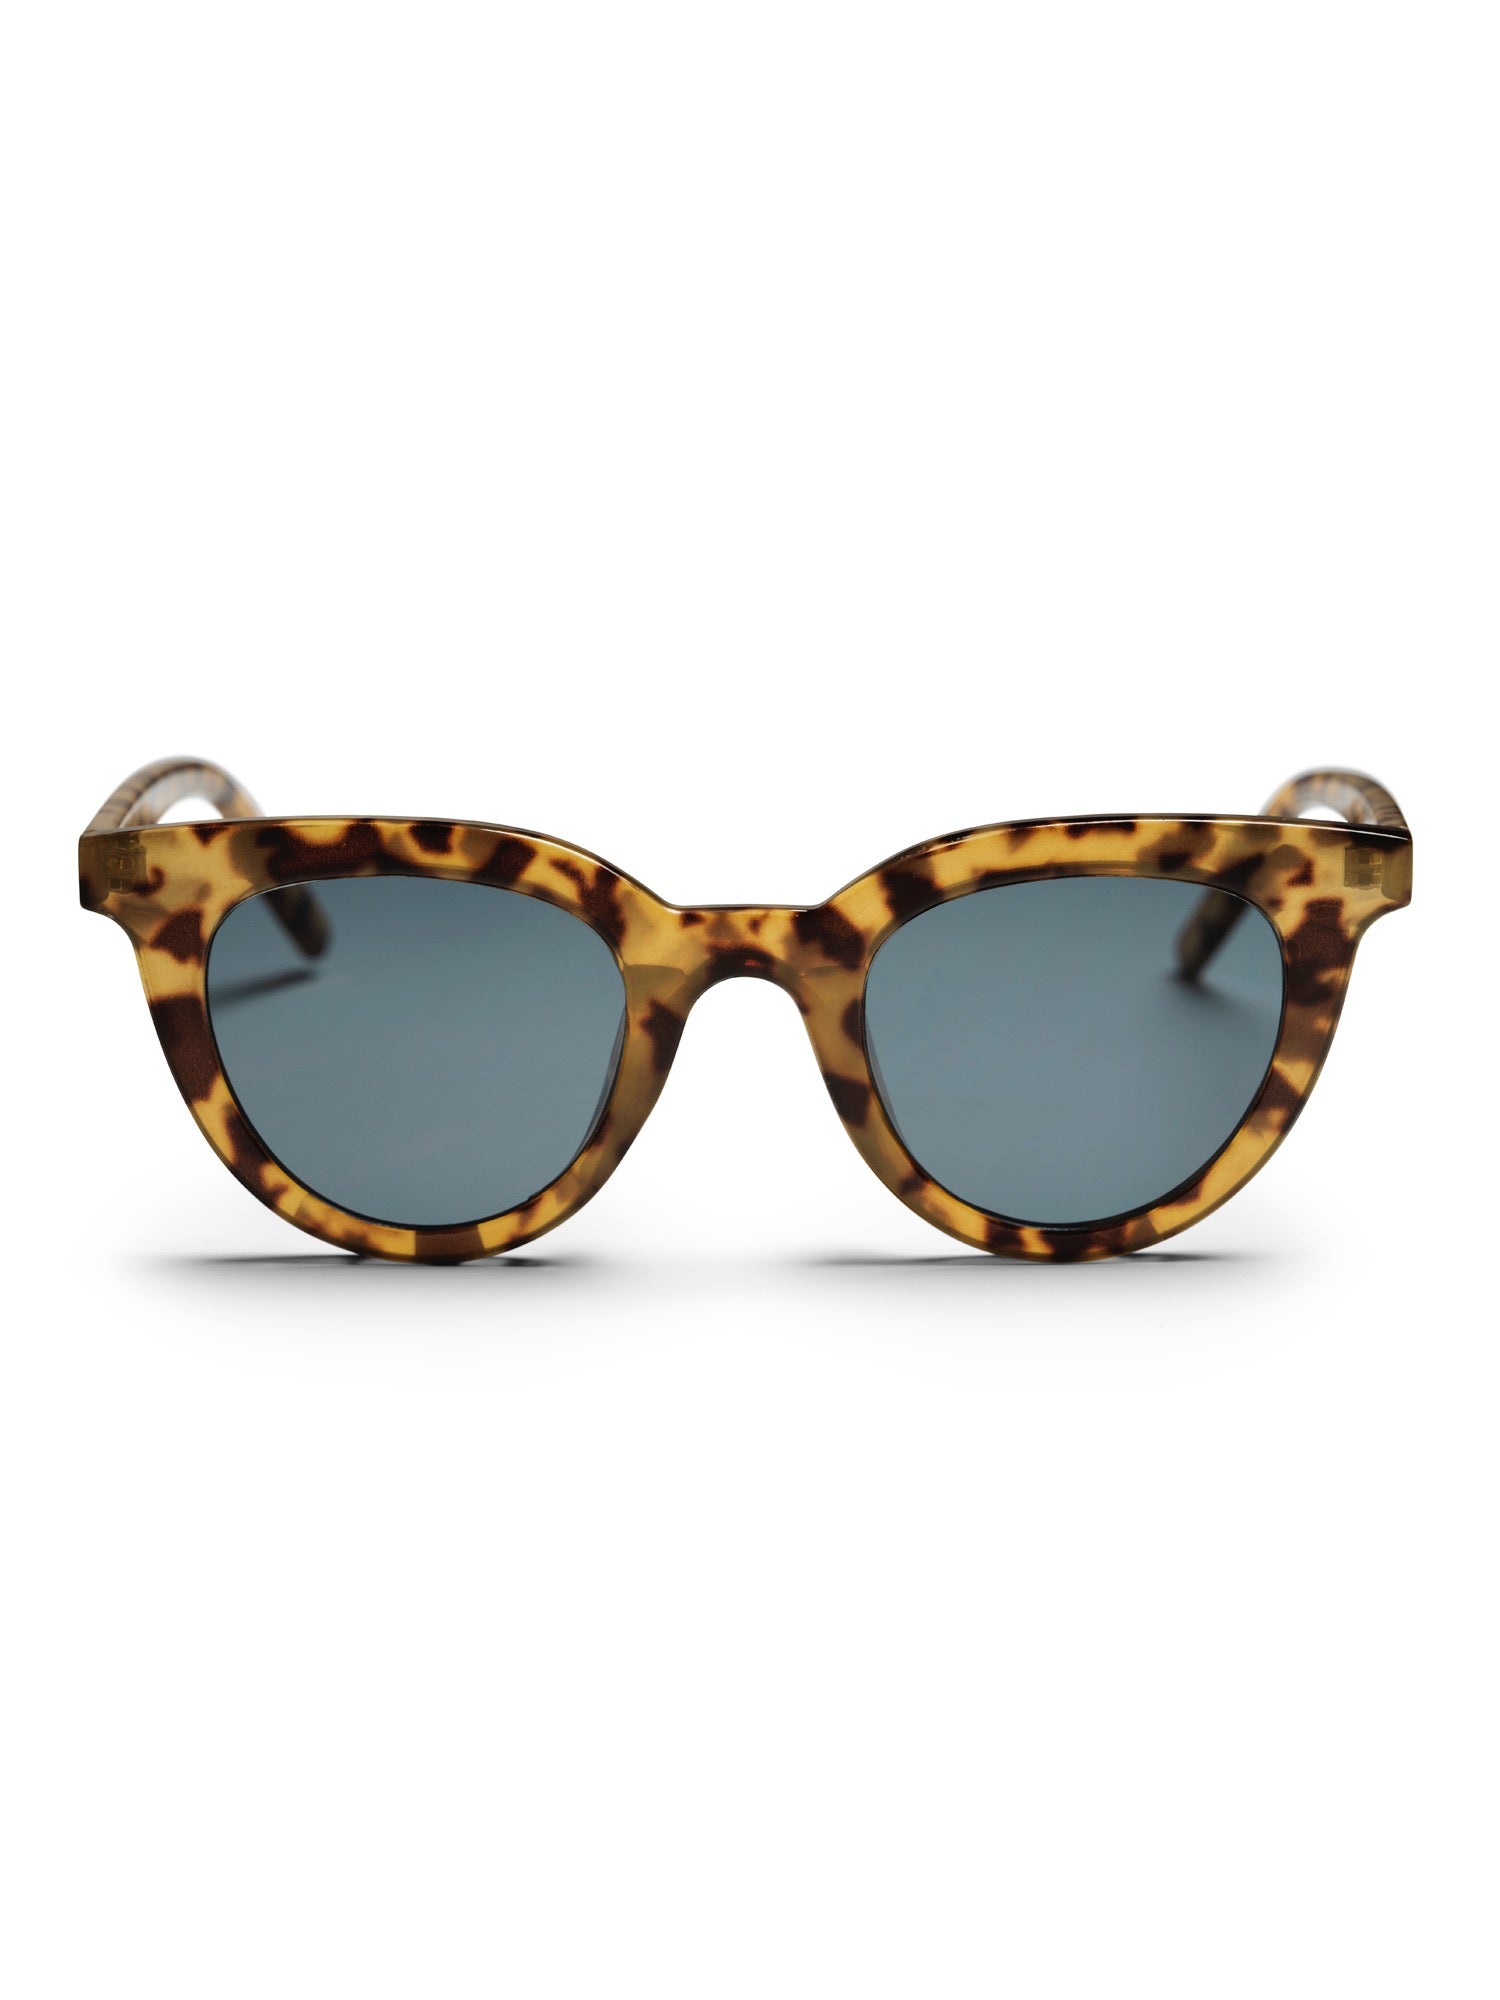 CHPO Långholmen Sunglasses - Recycled Plastic Leopard / Black Sunglasses